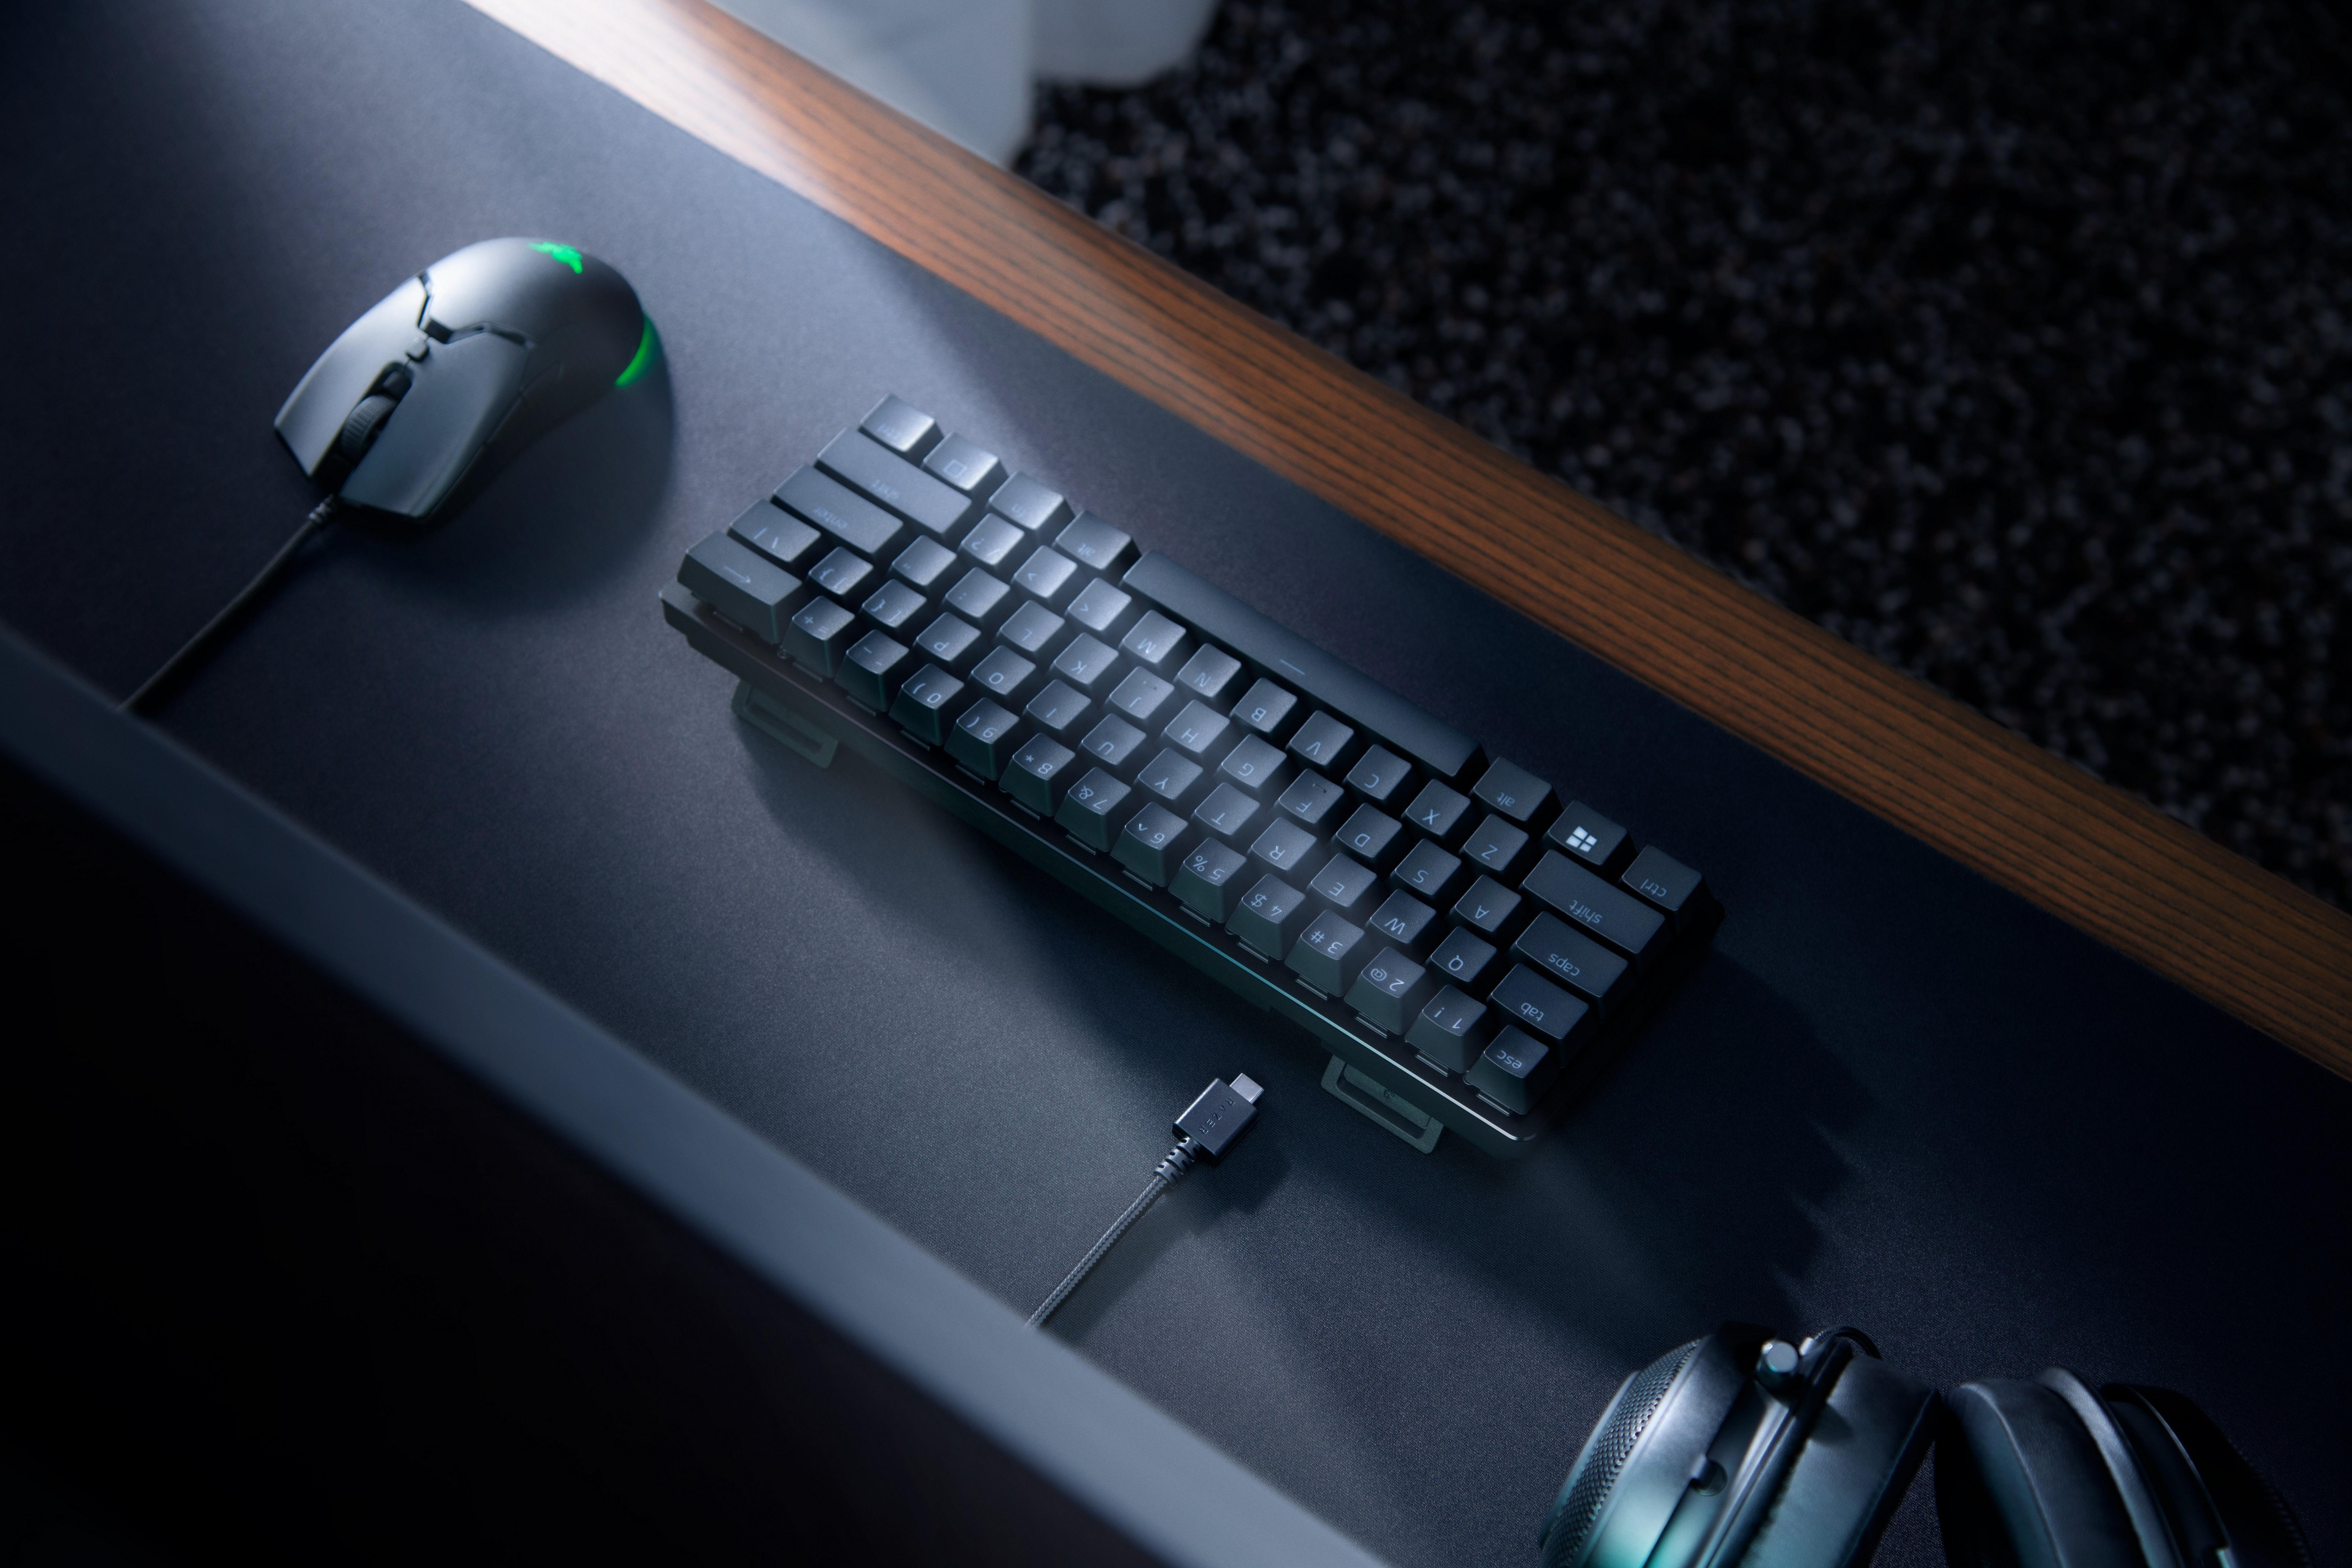 Razer Huntsman Mini Analog review: a premium 60 percent keyboard